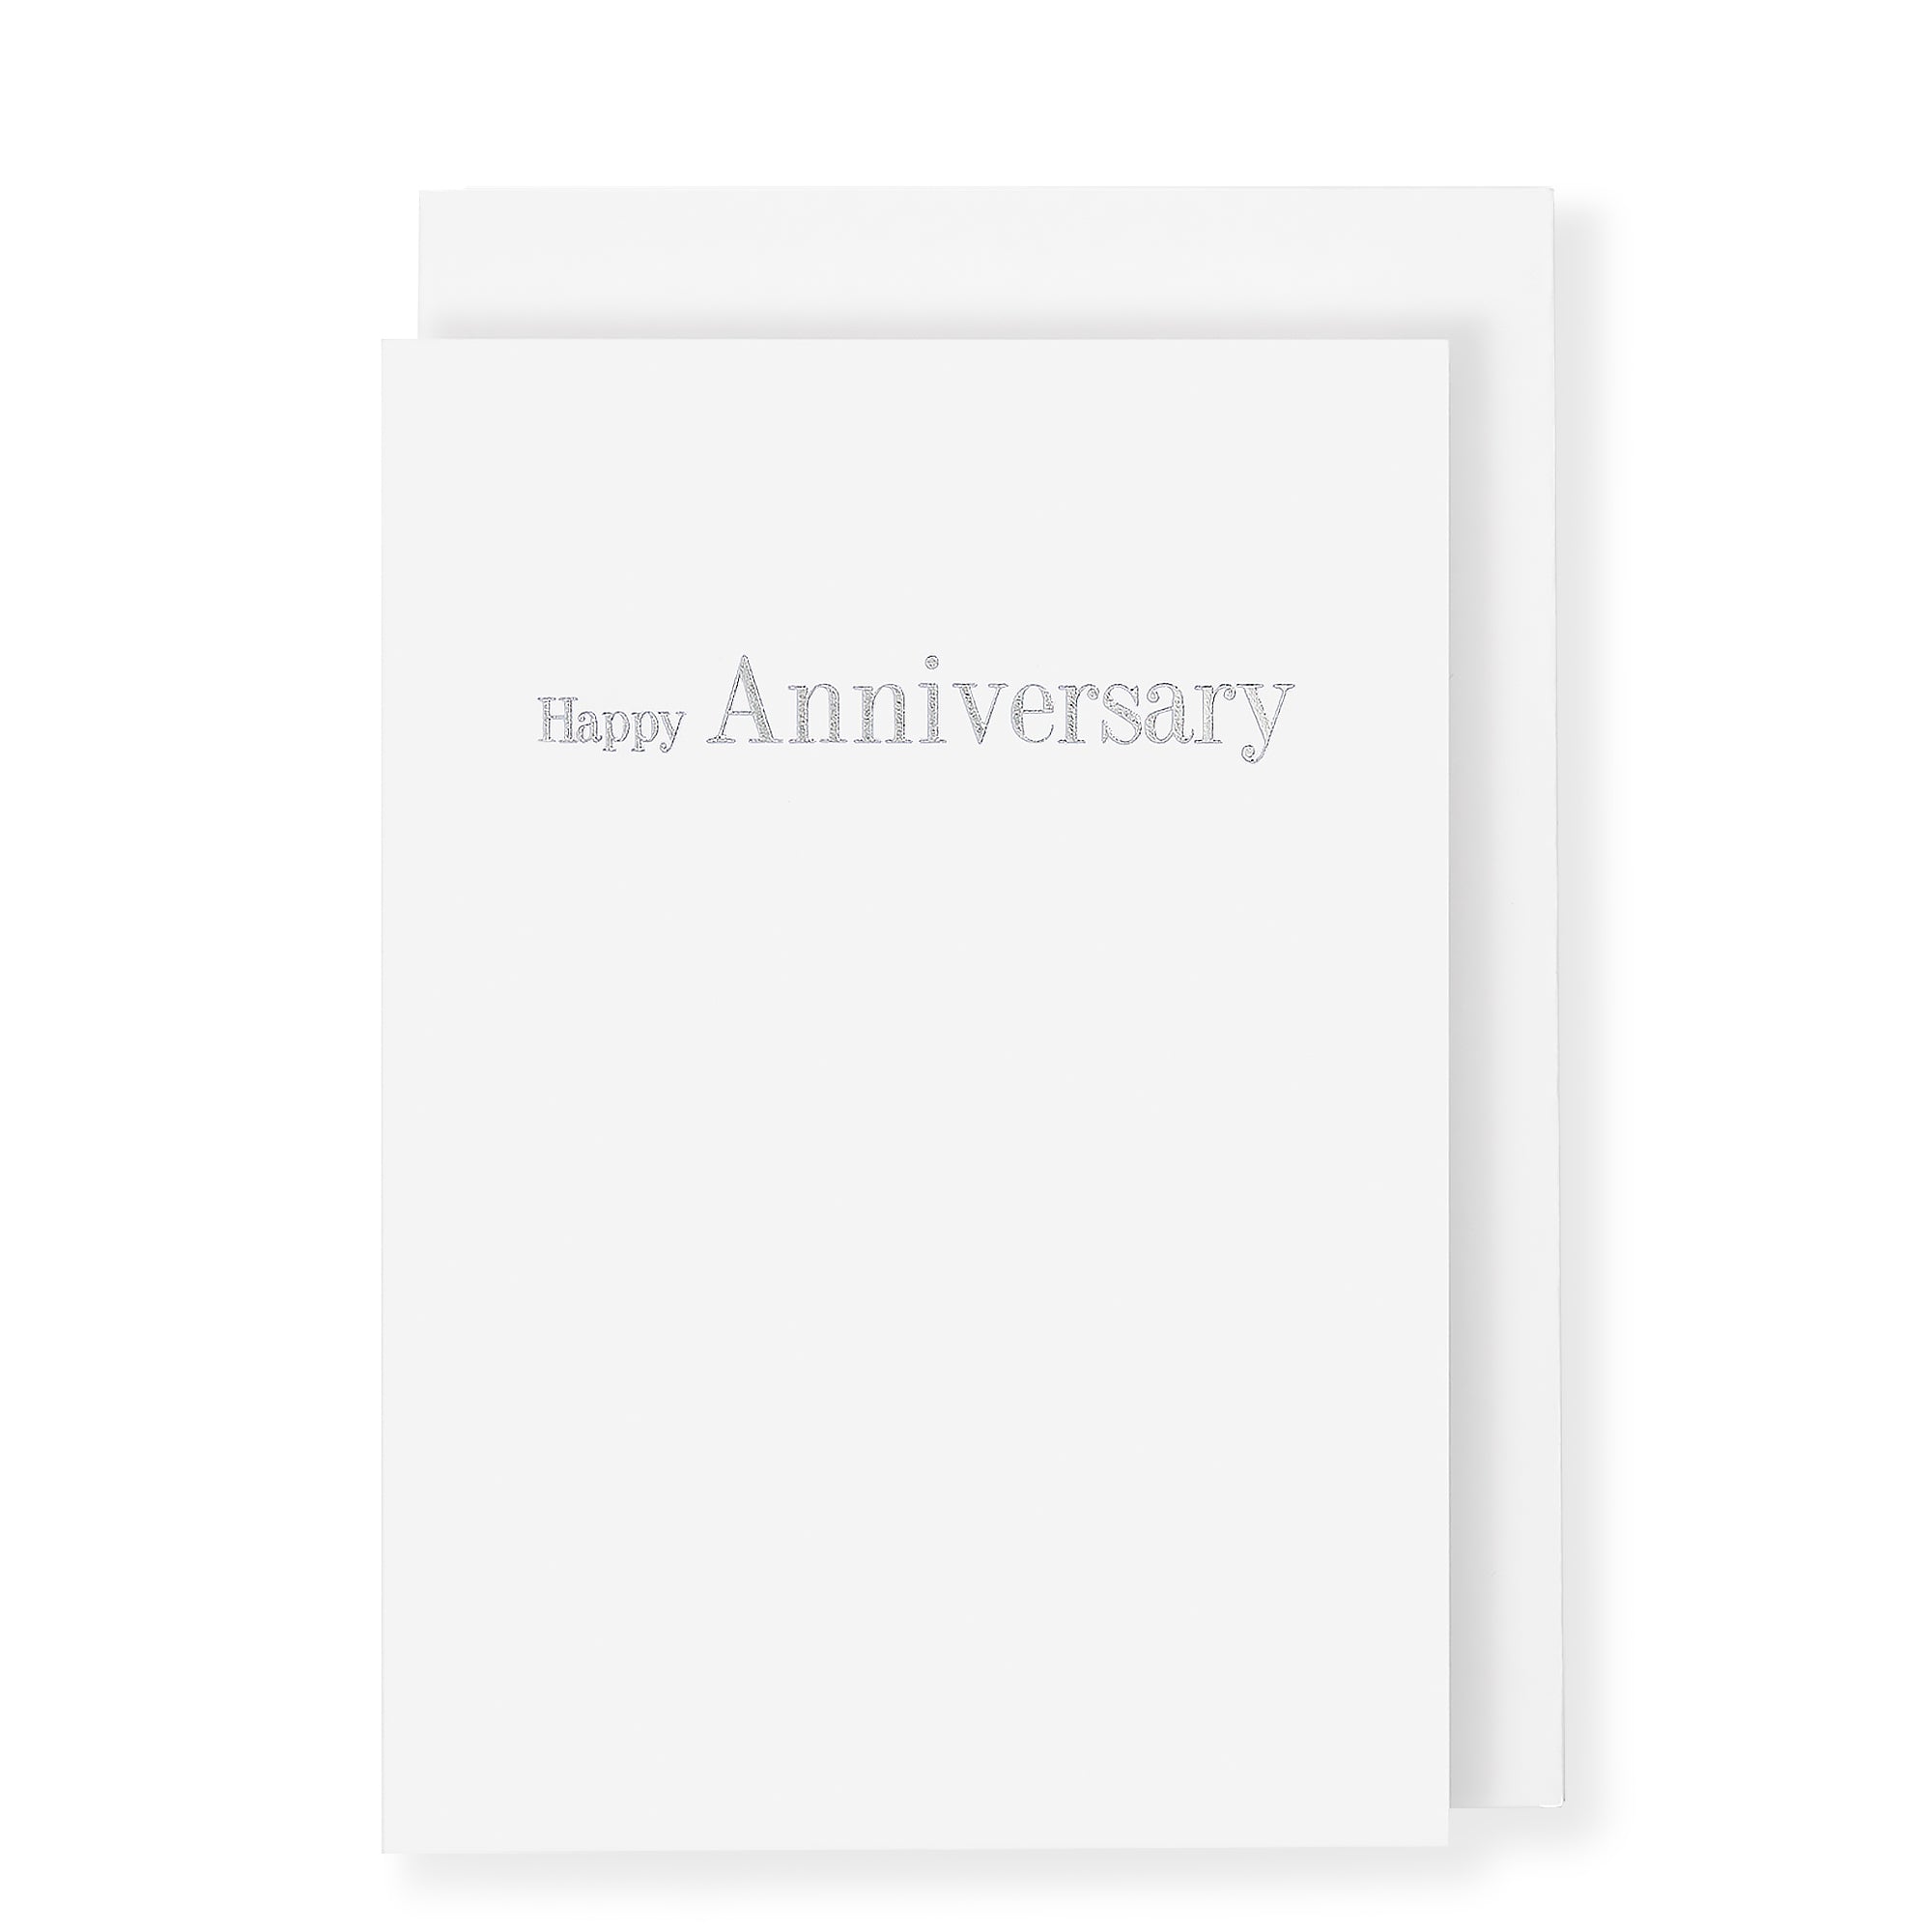 Happy Anniversary Card, White